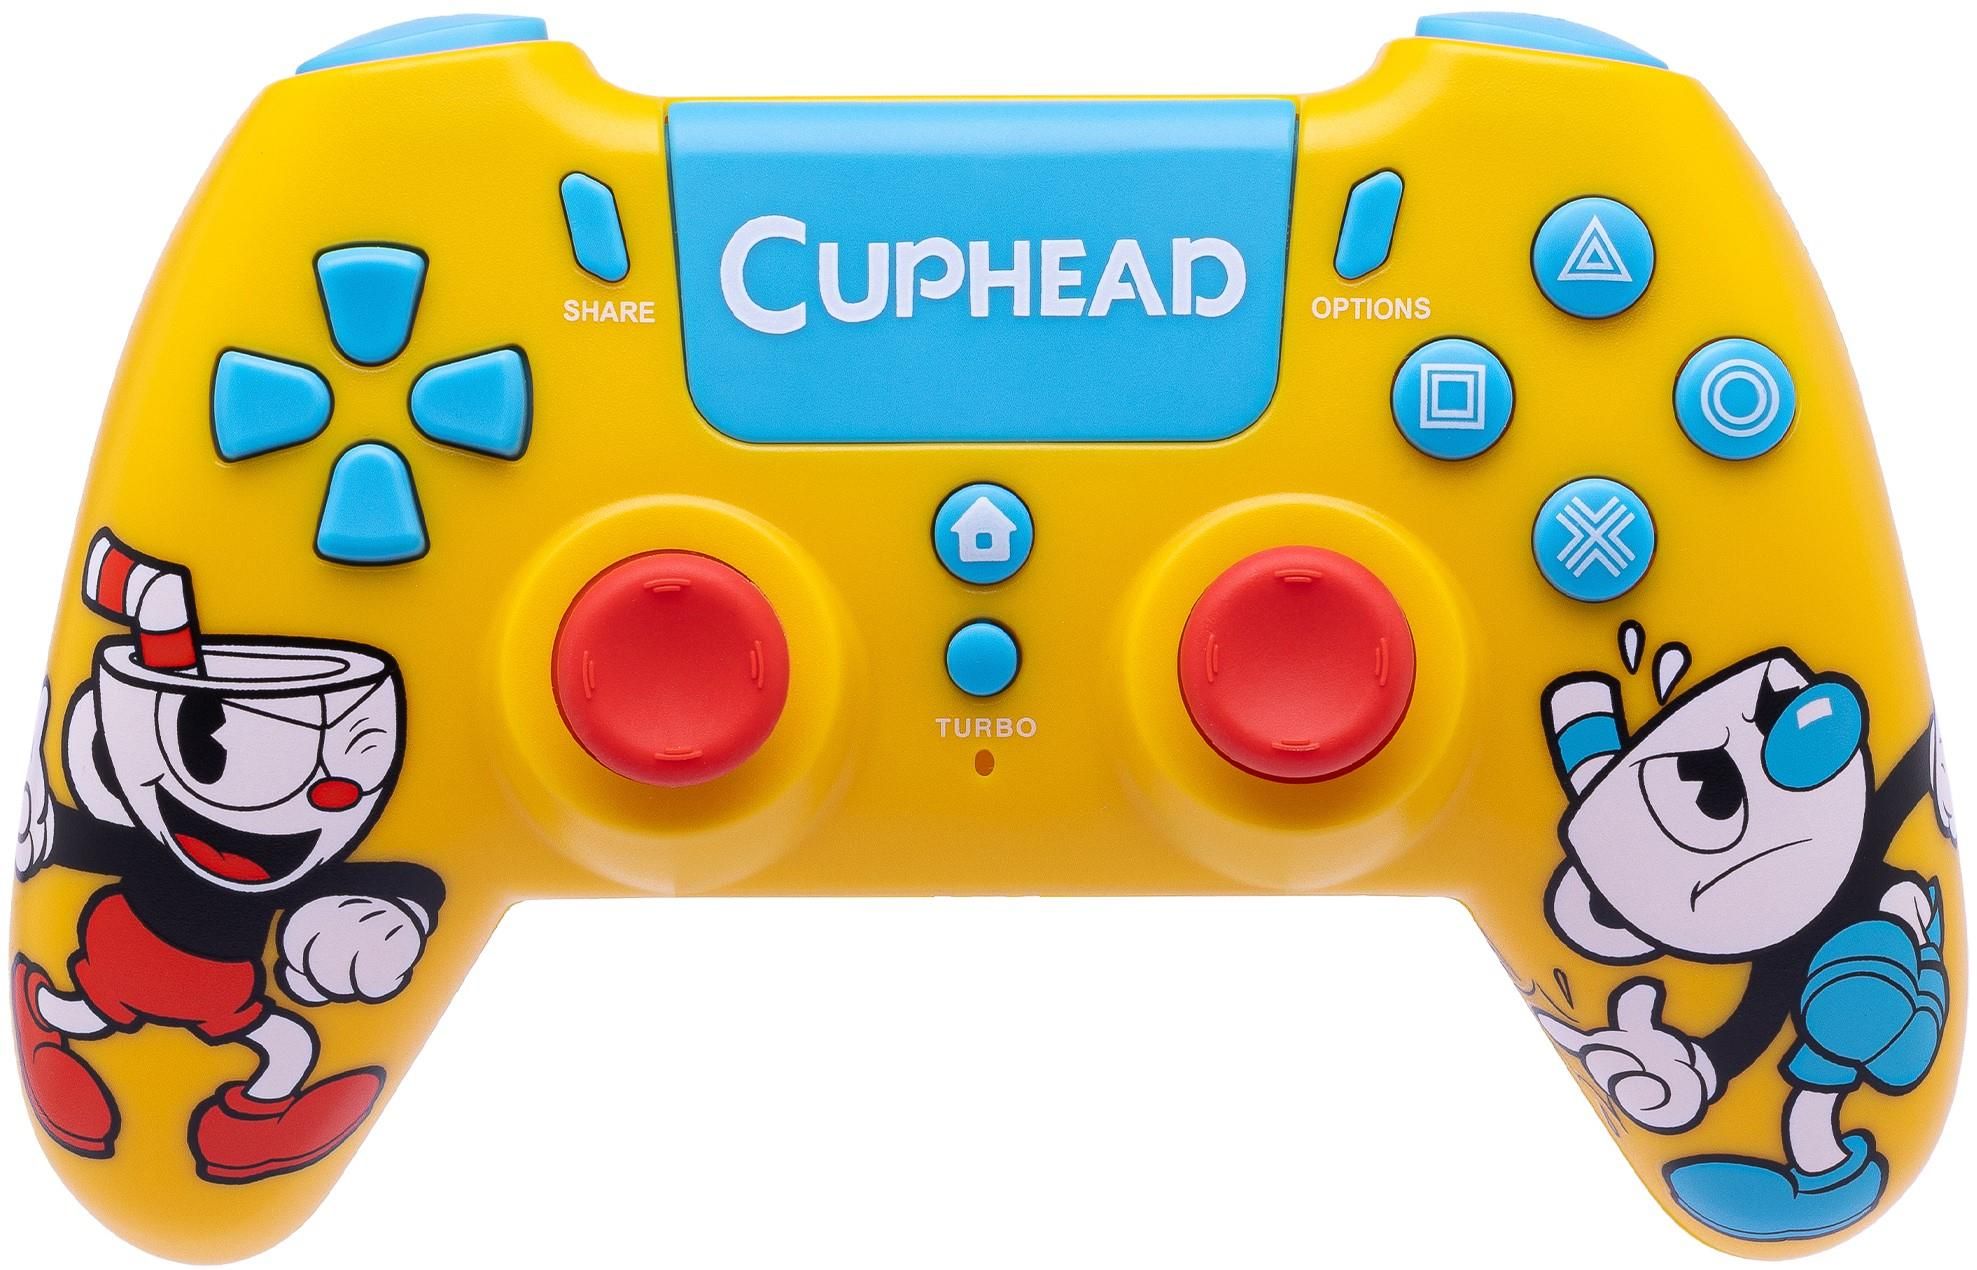 Qubick Gamepad Cuphead Wireless